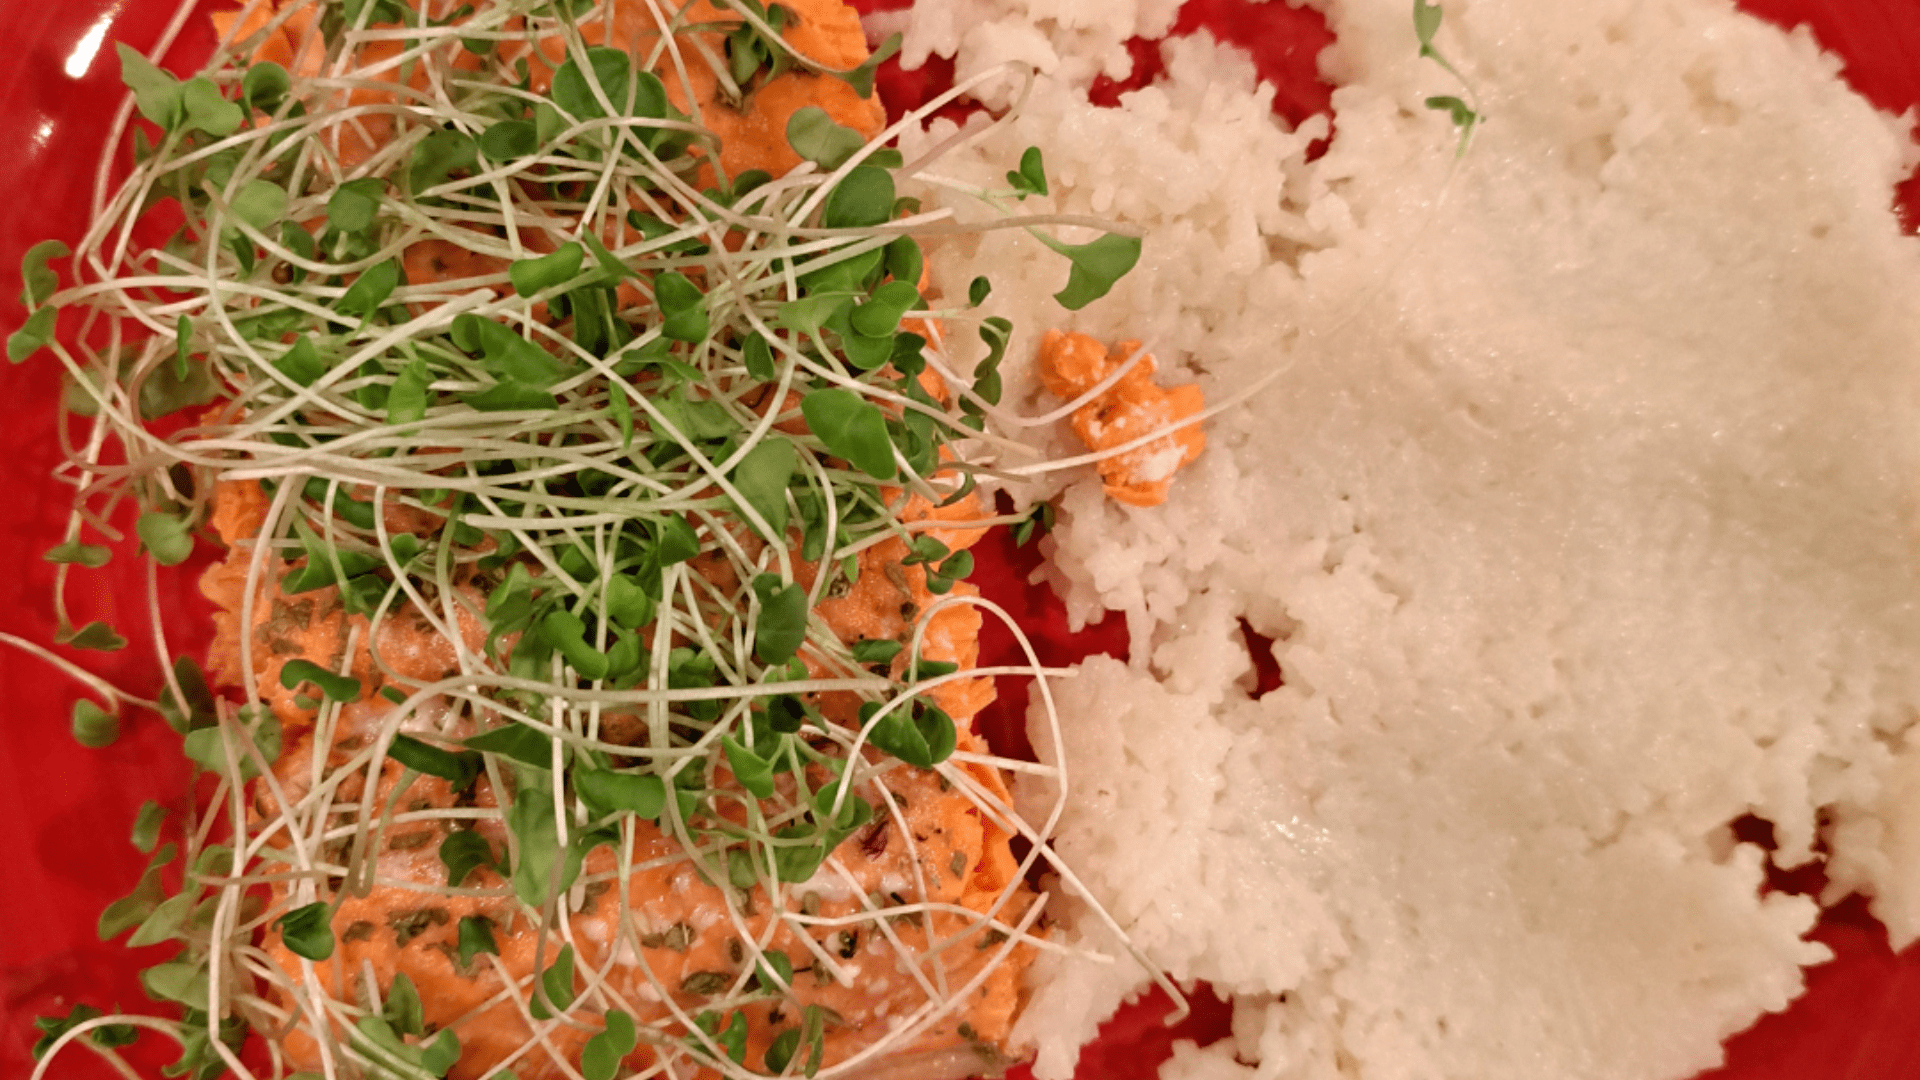 Baked salmon with micro broccoli and micro radish.